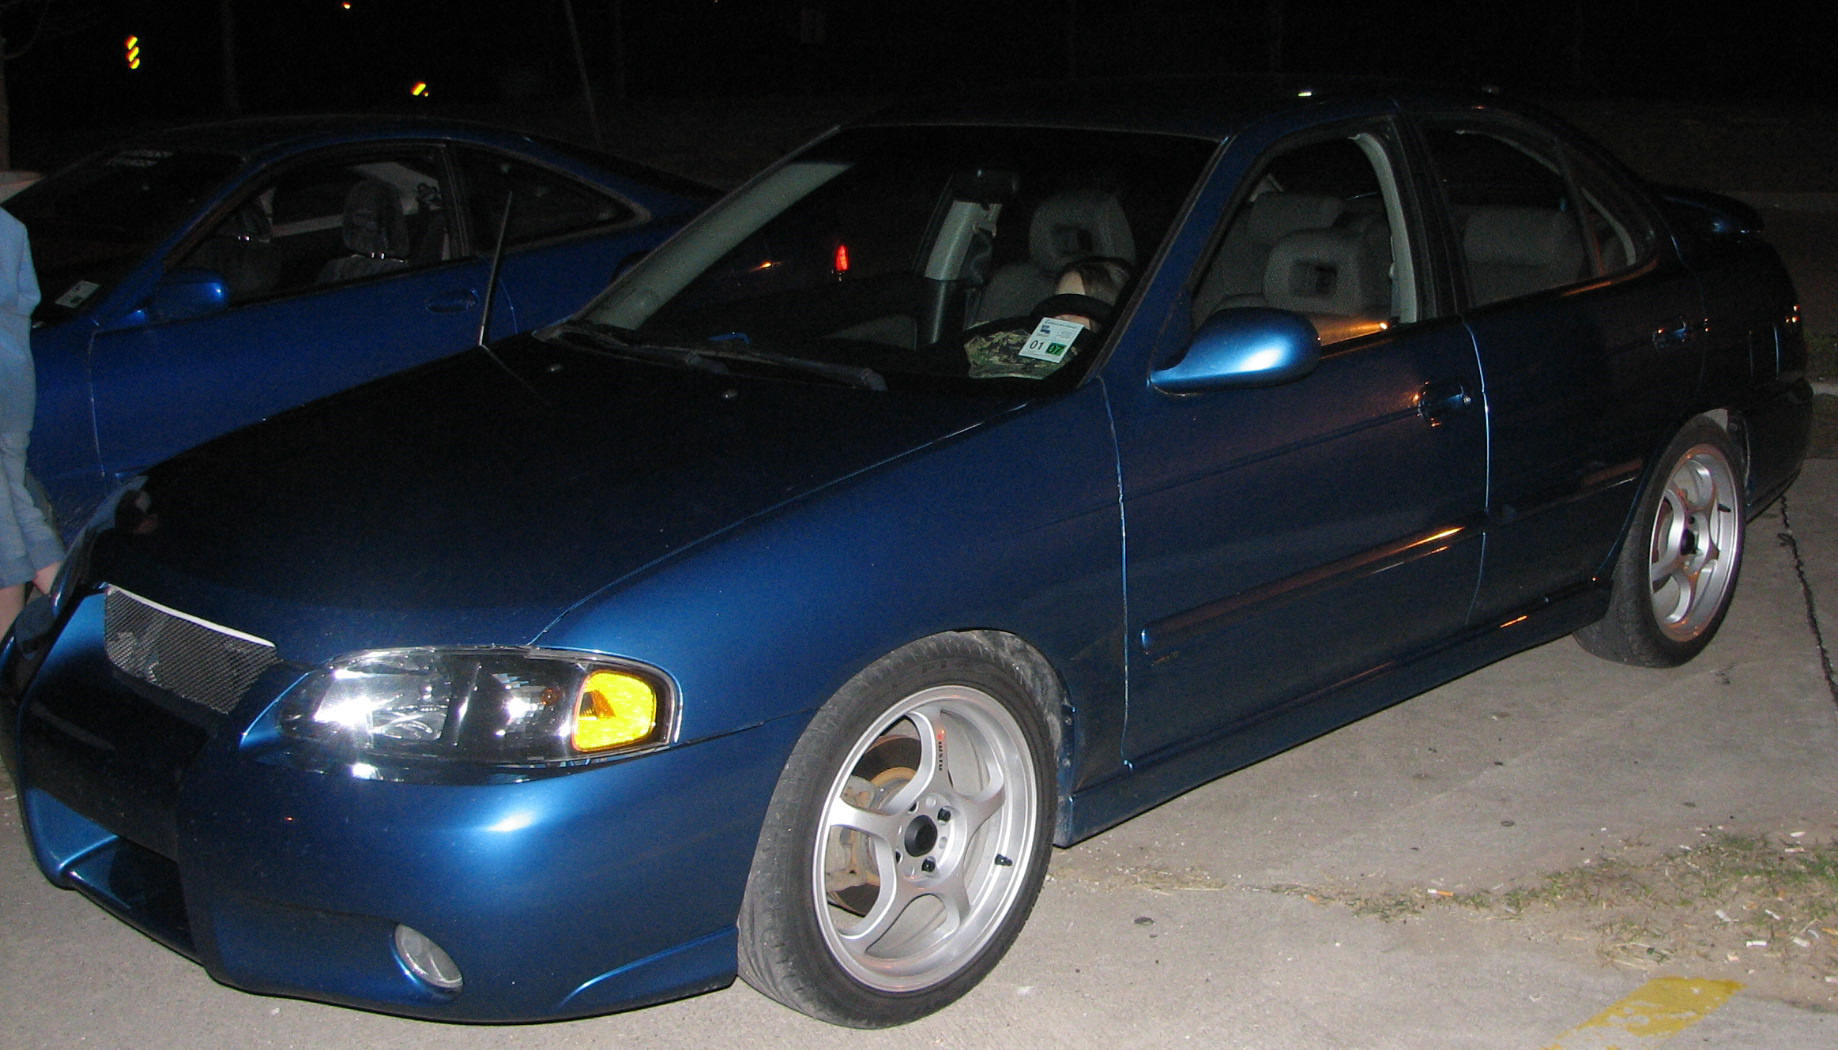  2003 Nissan Sentra SER SpecV Turbo